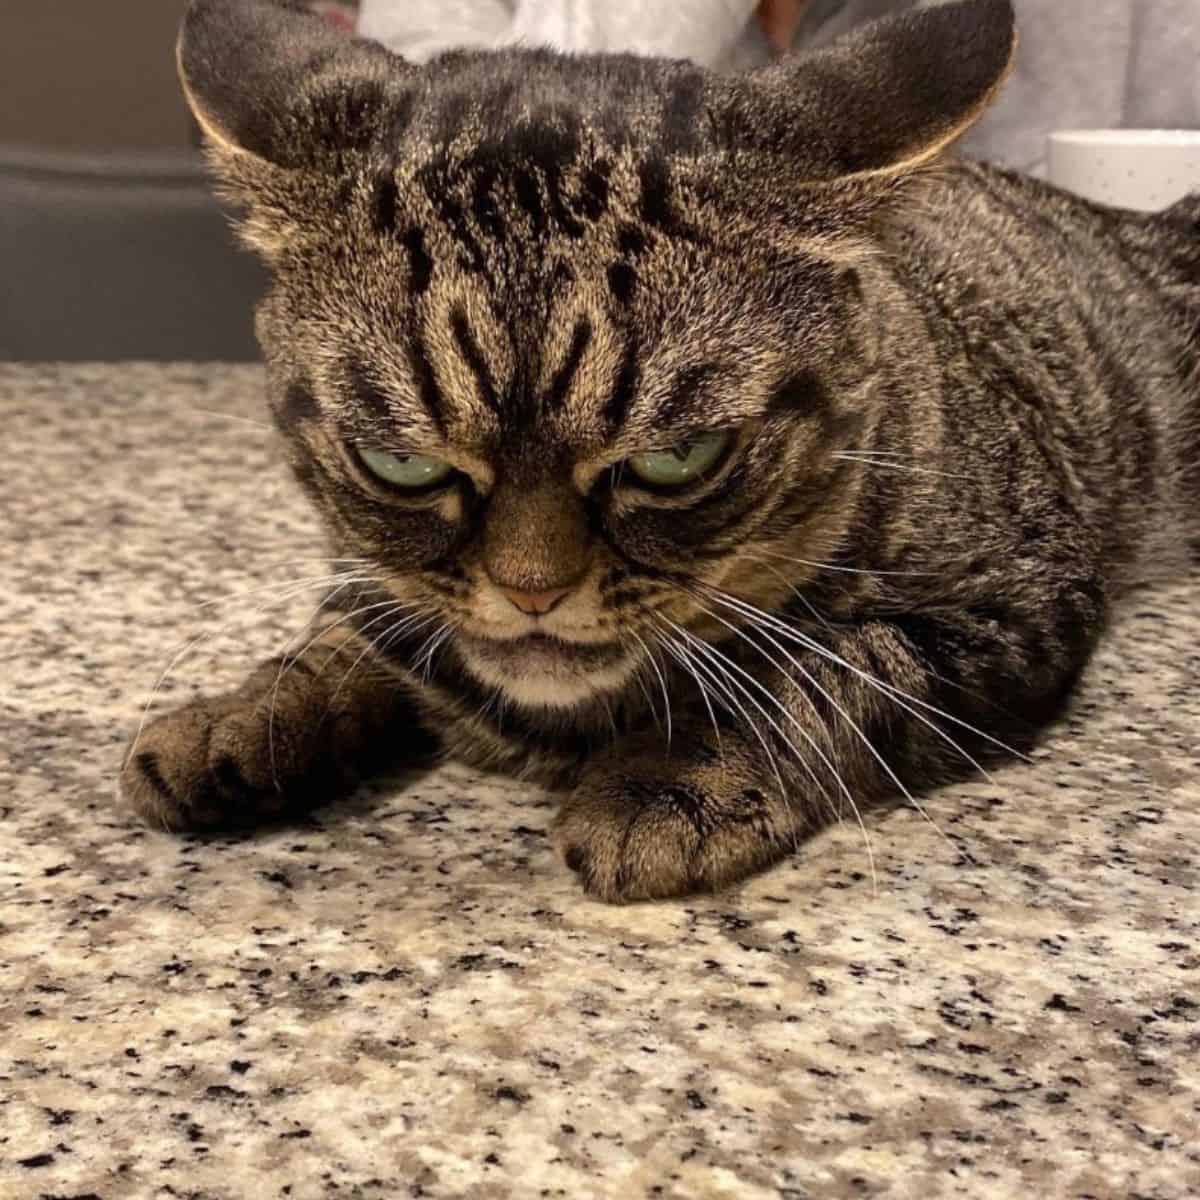 photo of the grumpy cat lying down